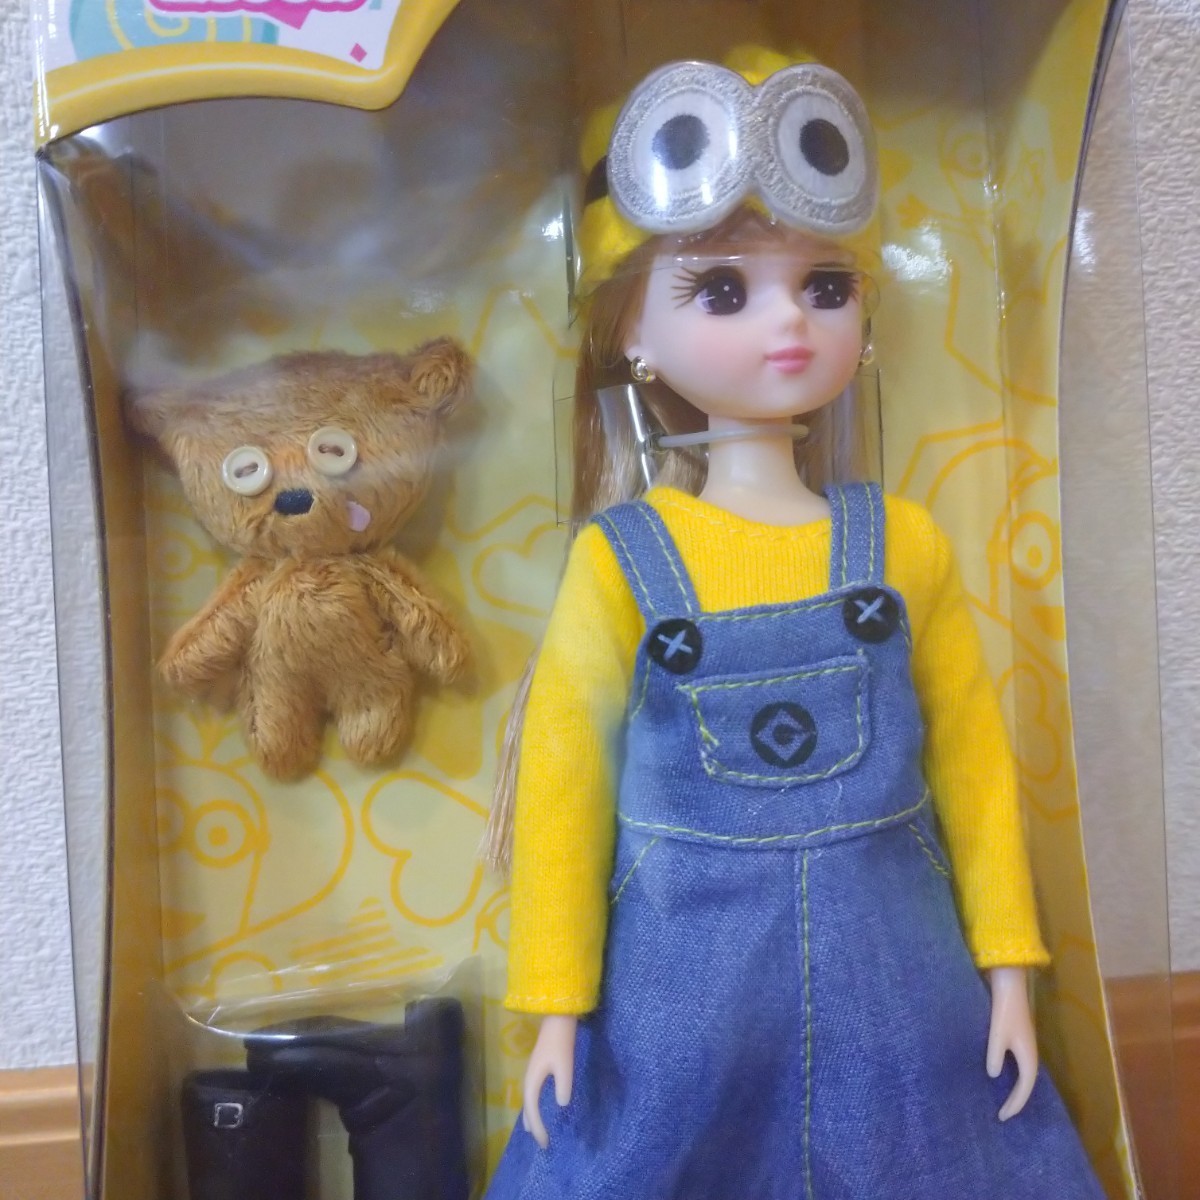  minions minion doll リカちゃん リカちゃん人形 TAKARA ティム ボブ tim bob ミニオンズ ミニオン figure コレクション 置物 limited_画像2